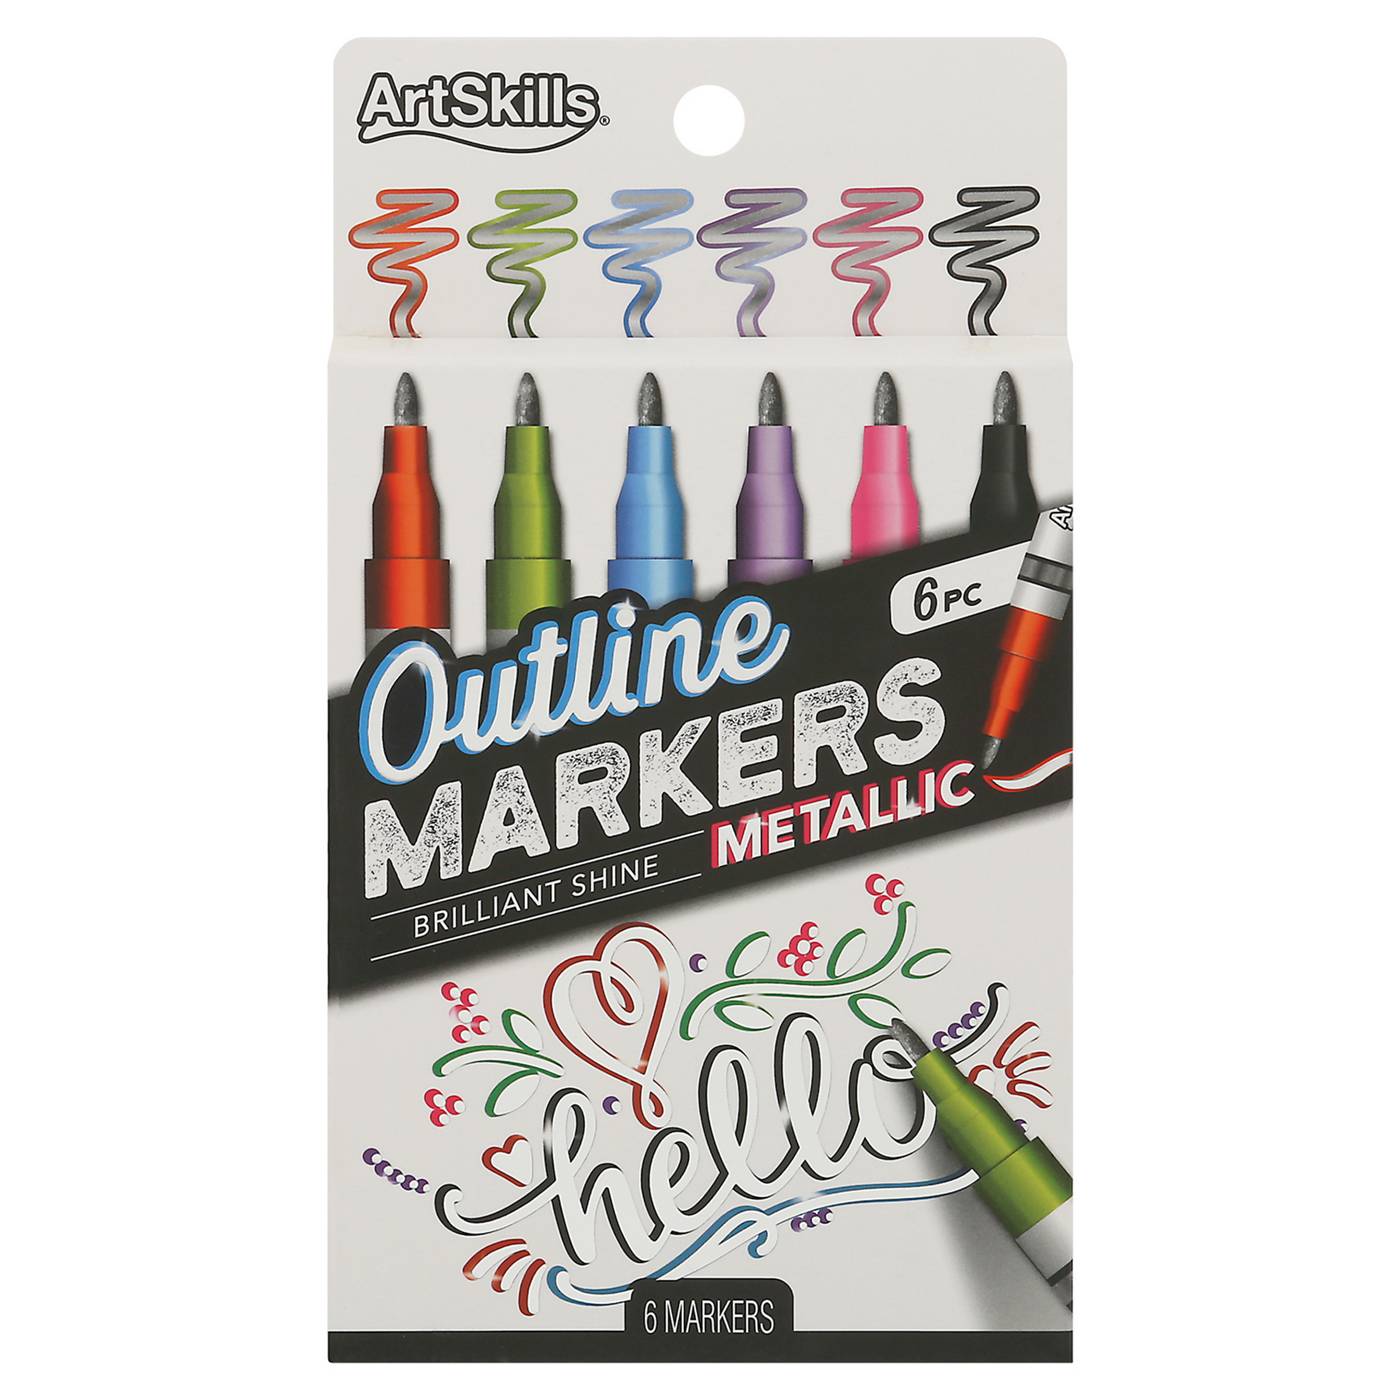 ArtSkills Brilliant Shine Outline Metallic Markers